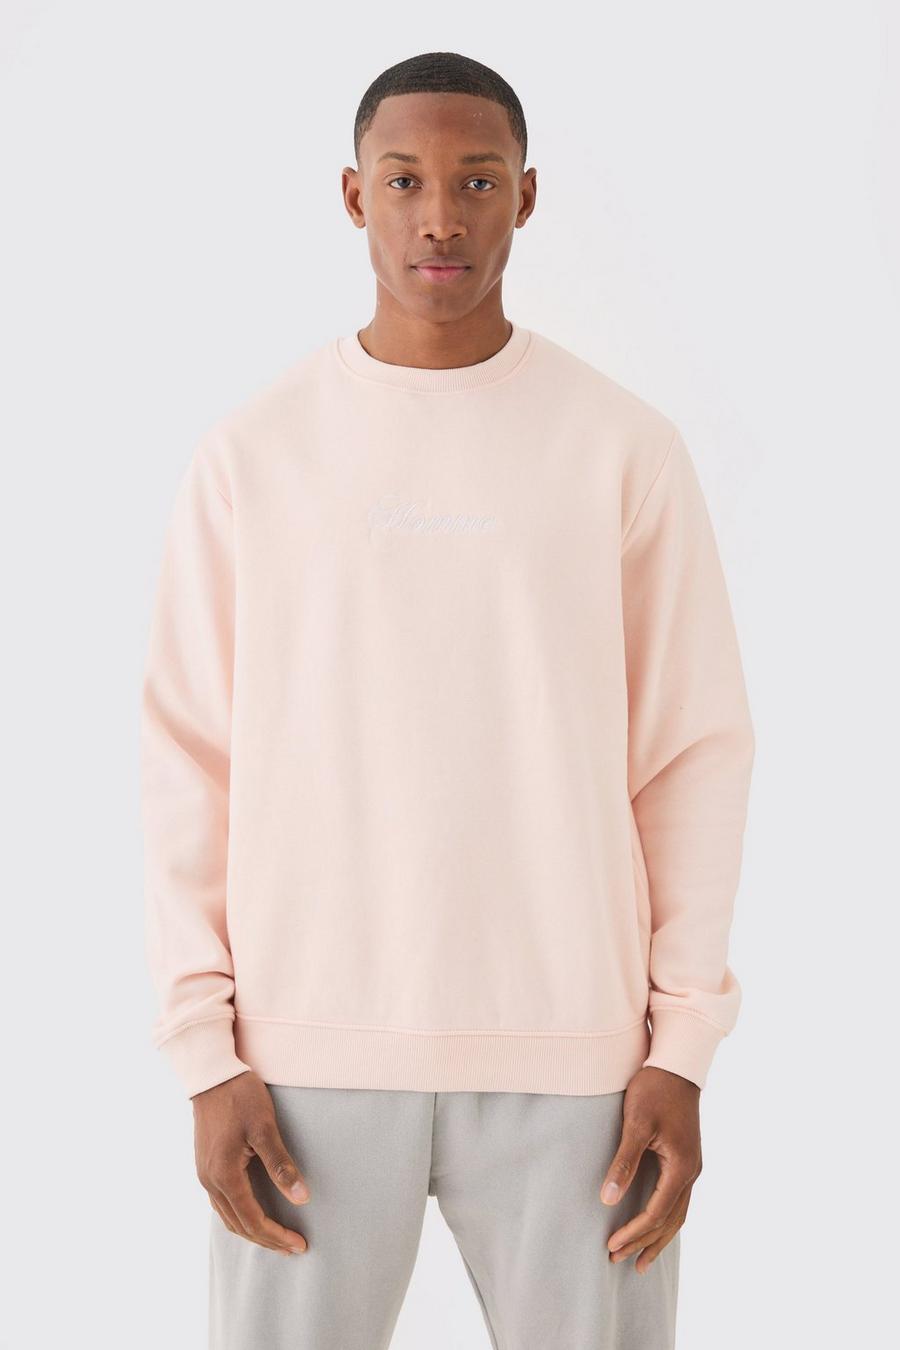 Pastel pink Basic Crew Neck Homme Sweatshirt